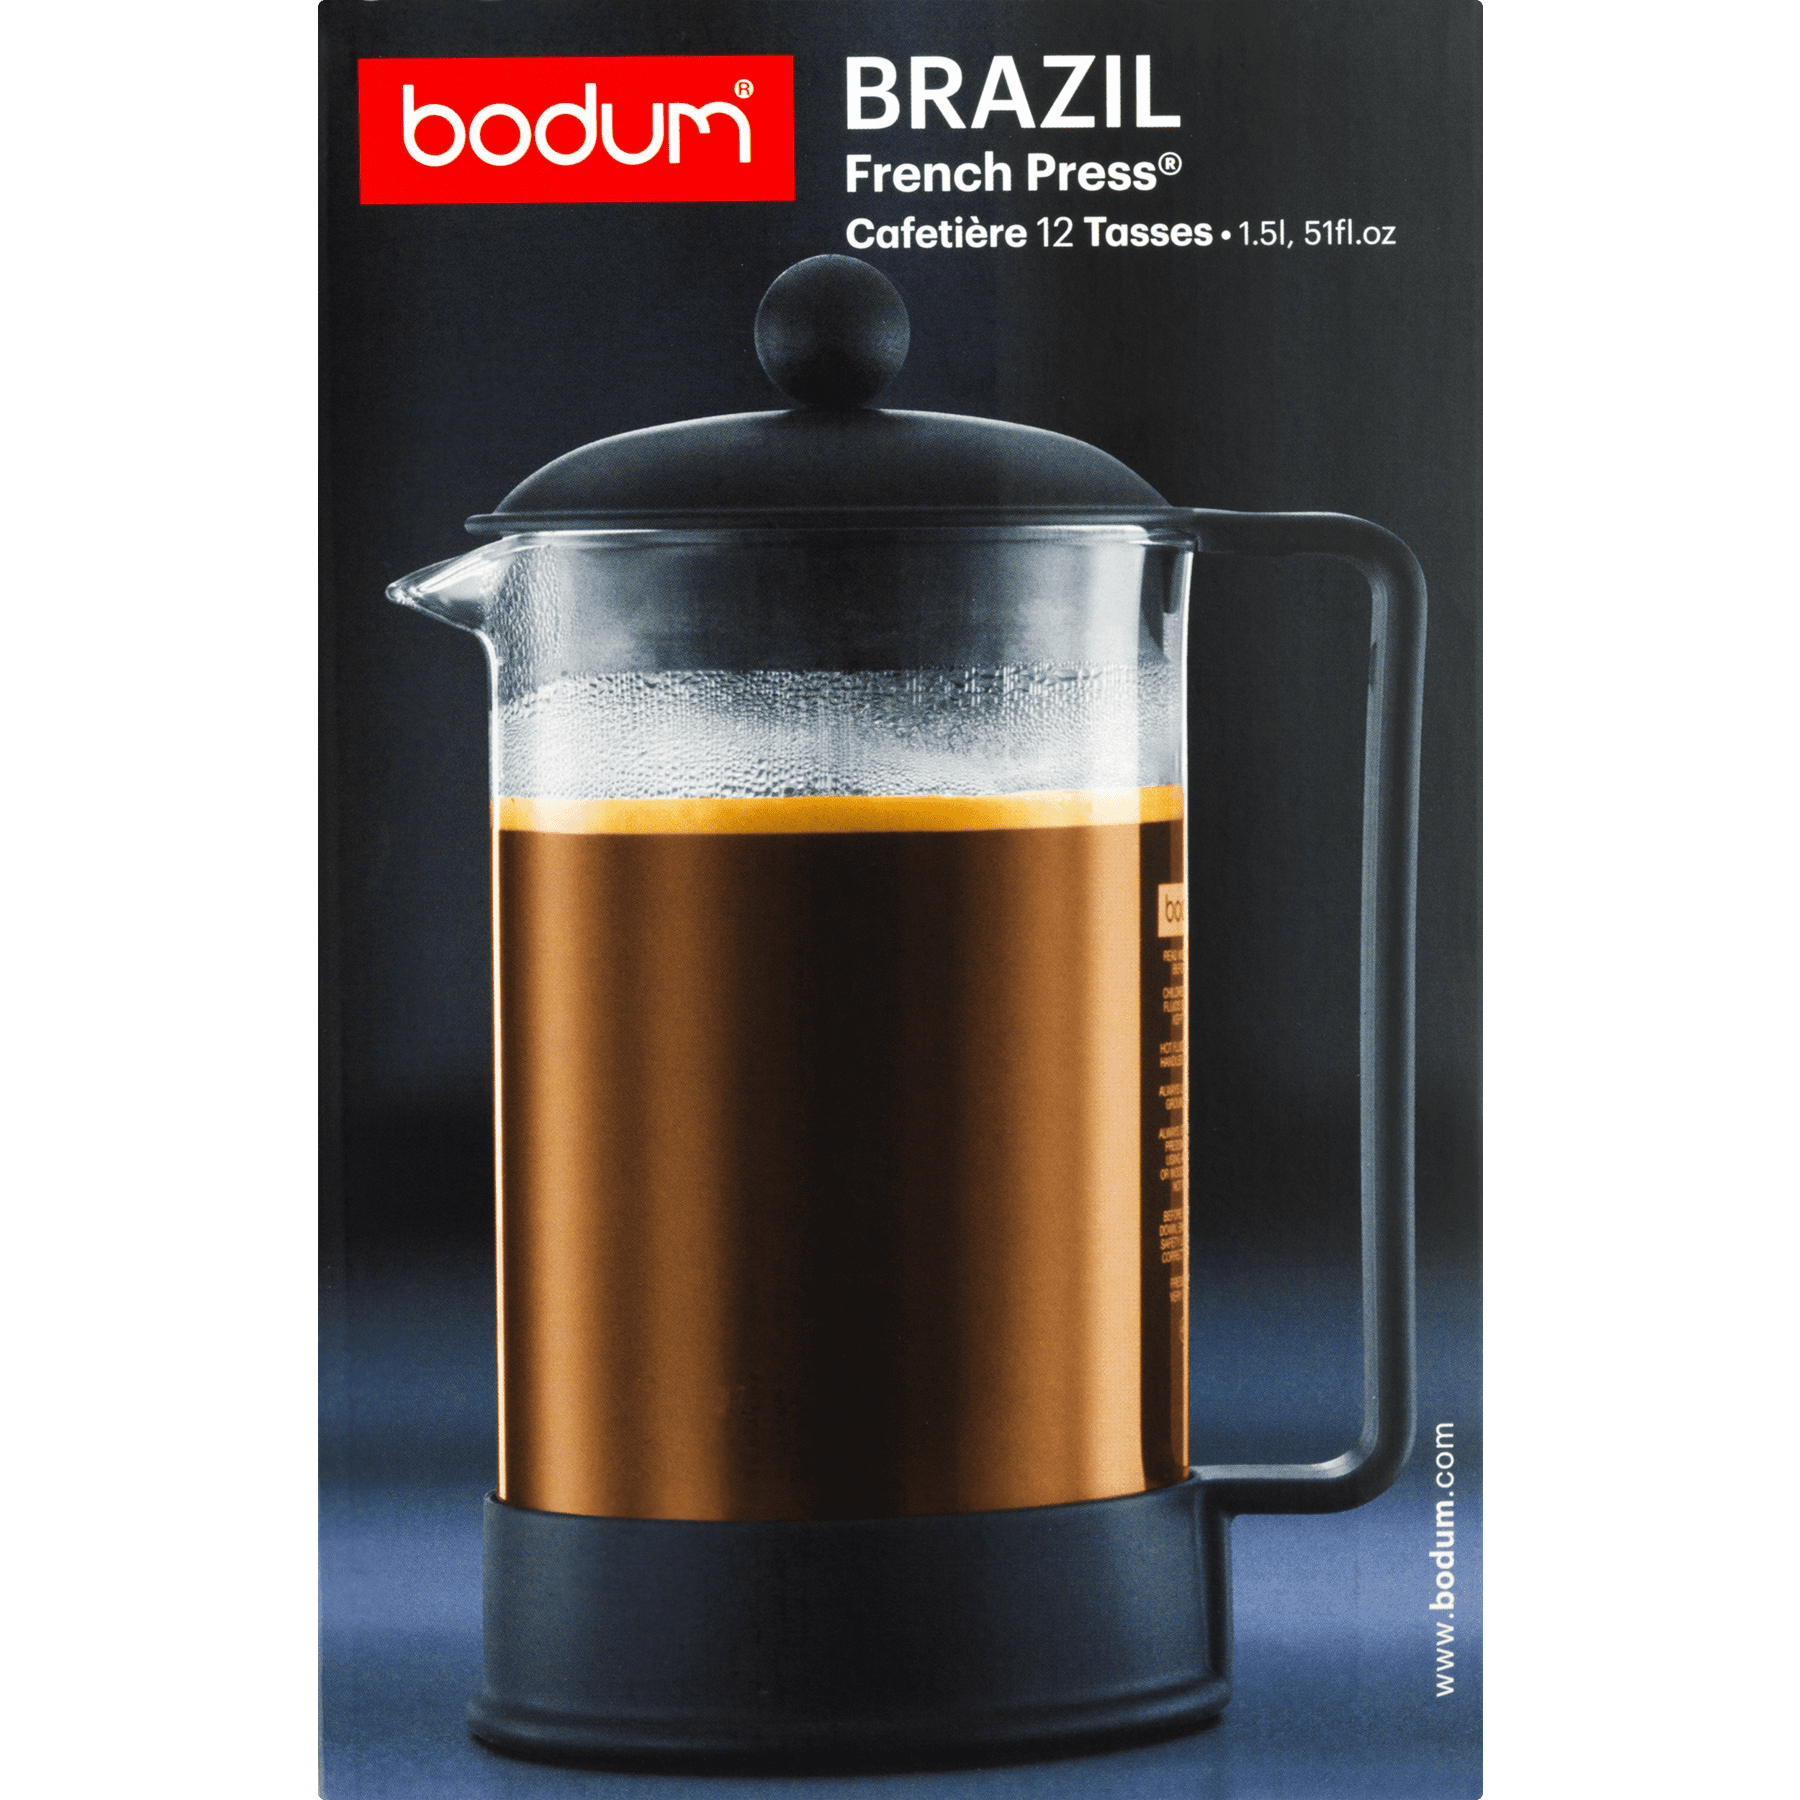 Bodum Brazil French Press Review